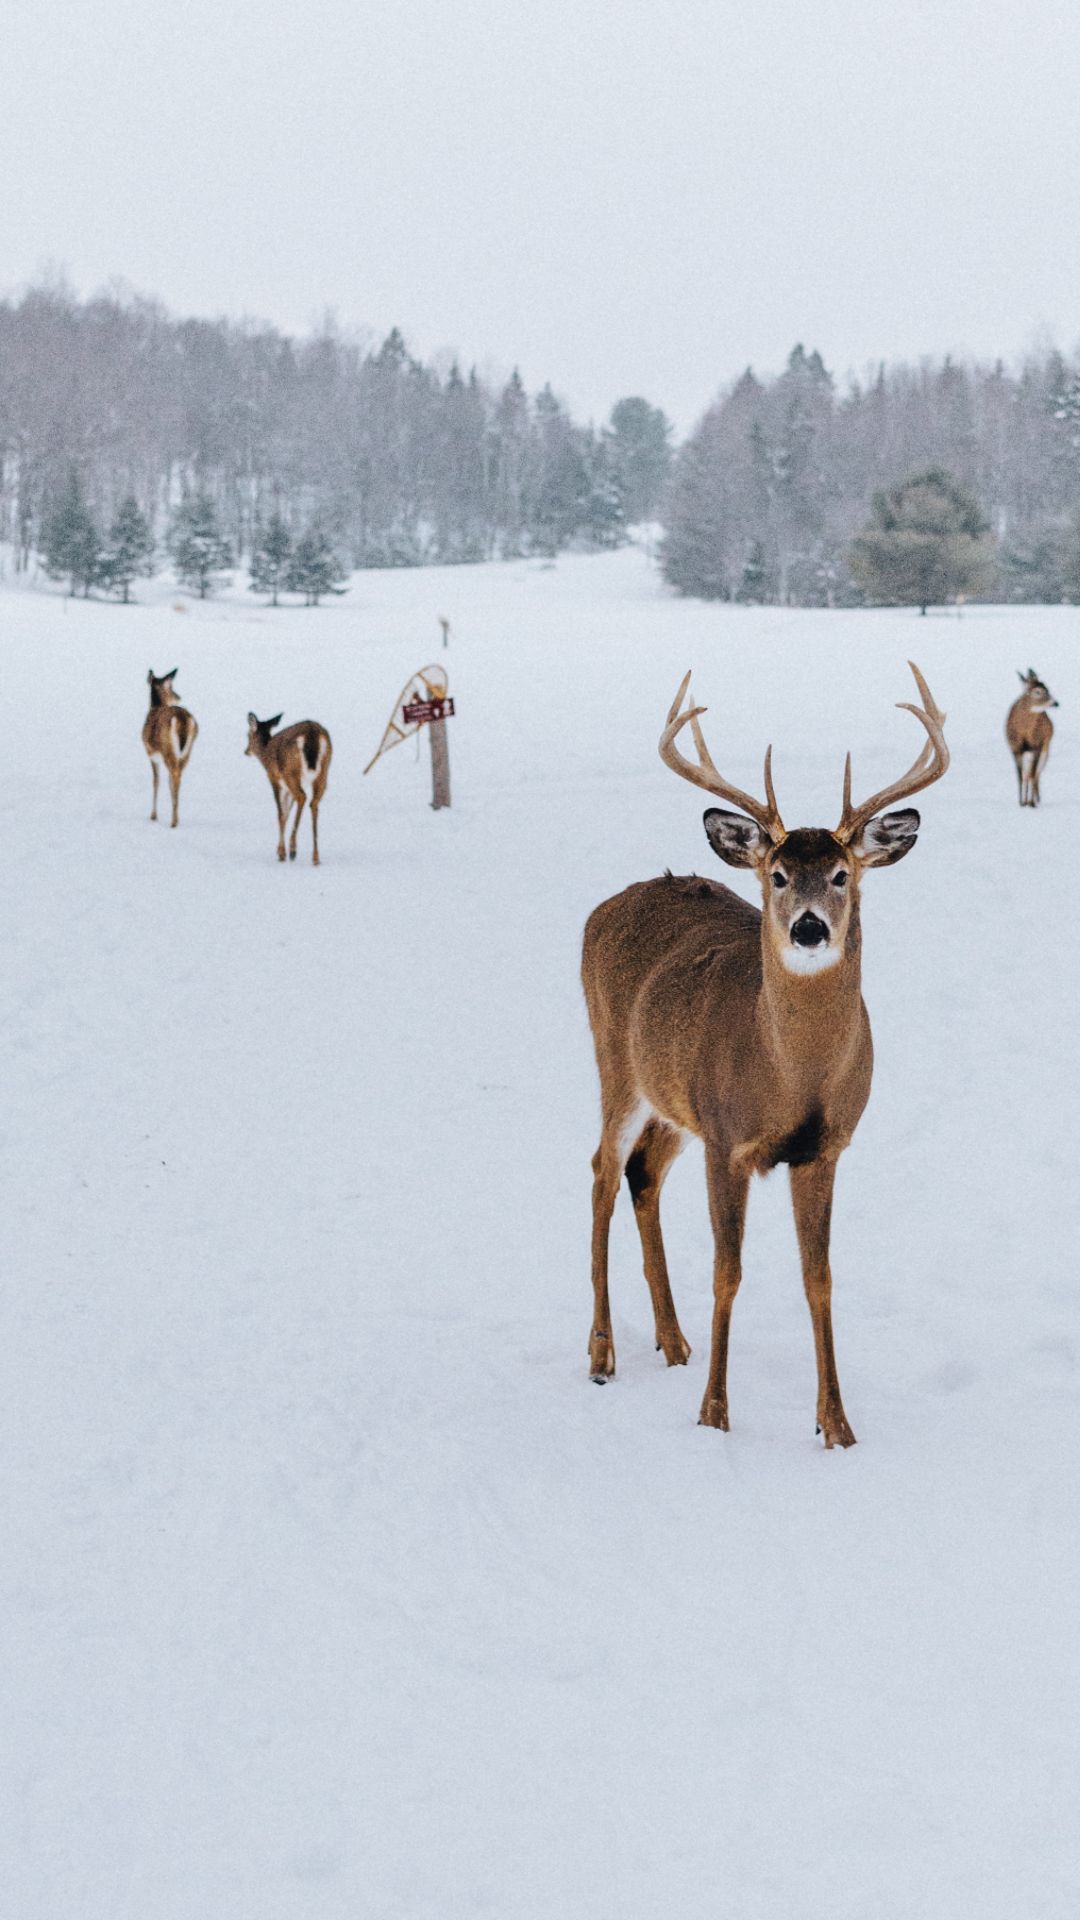 A herd of deer in the snow. - Deer